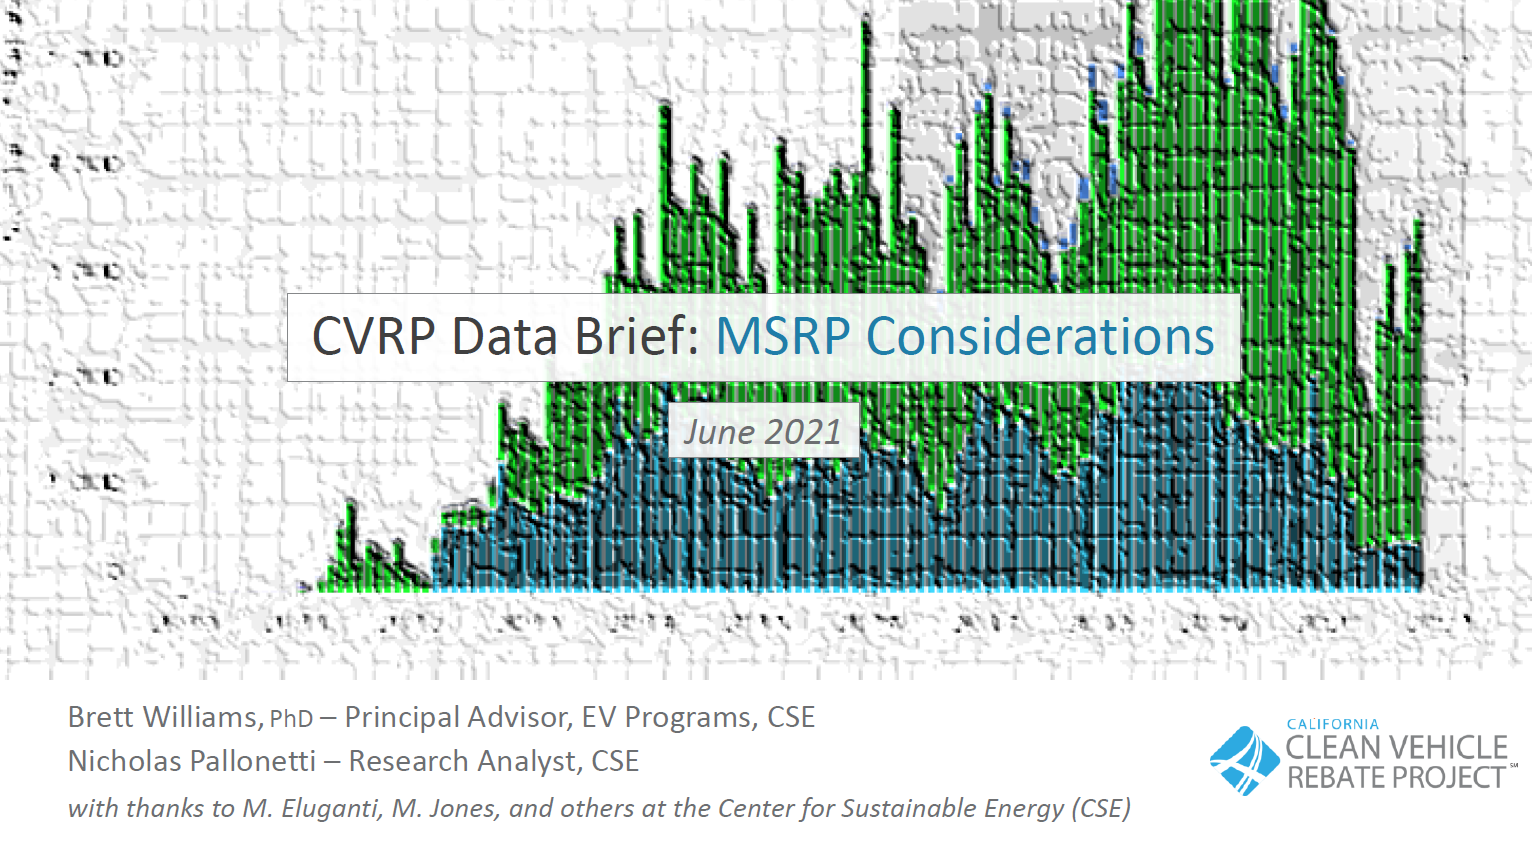 CVRP Data Brief image